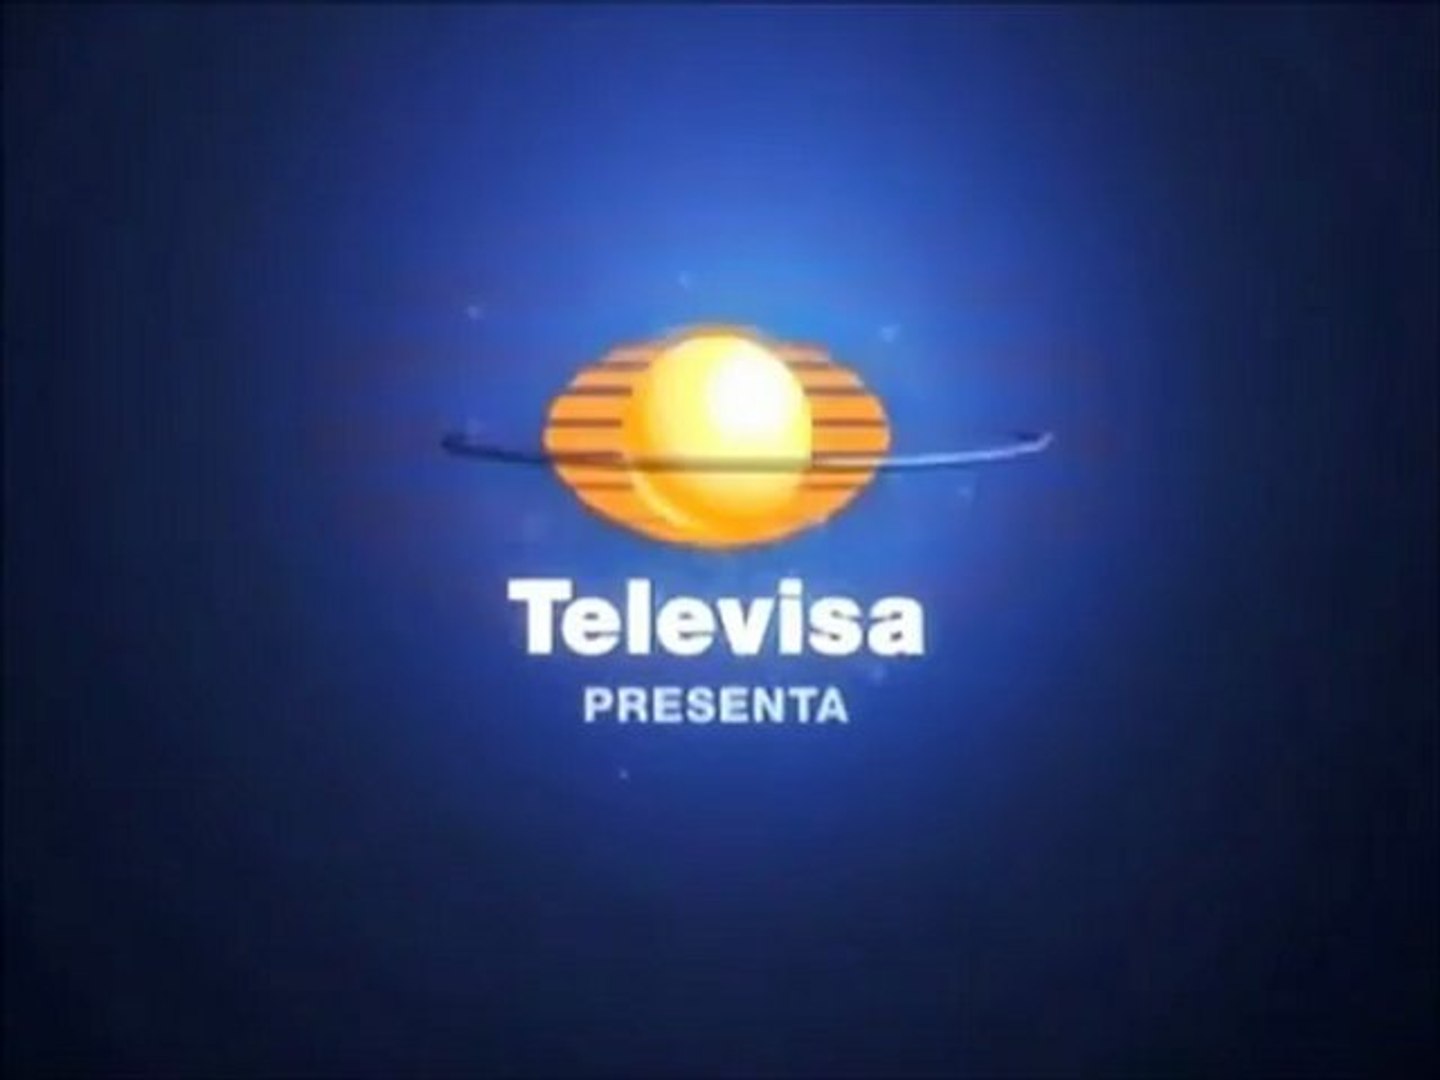 televisa_presenta.jpg